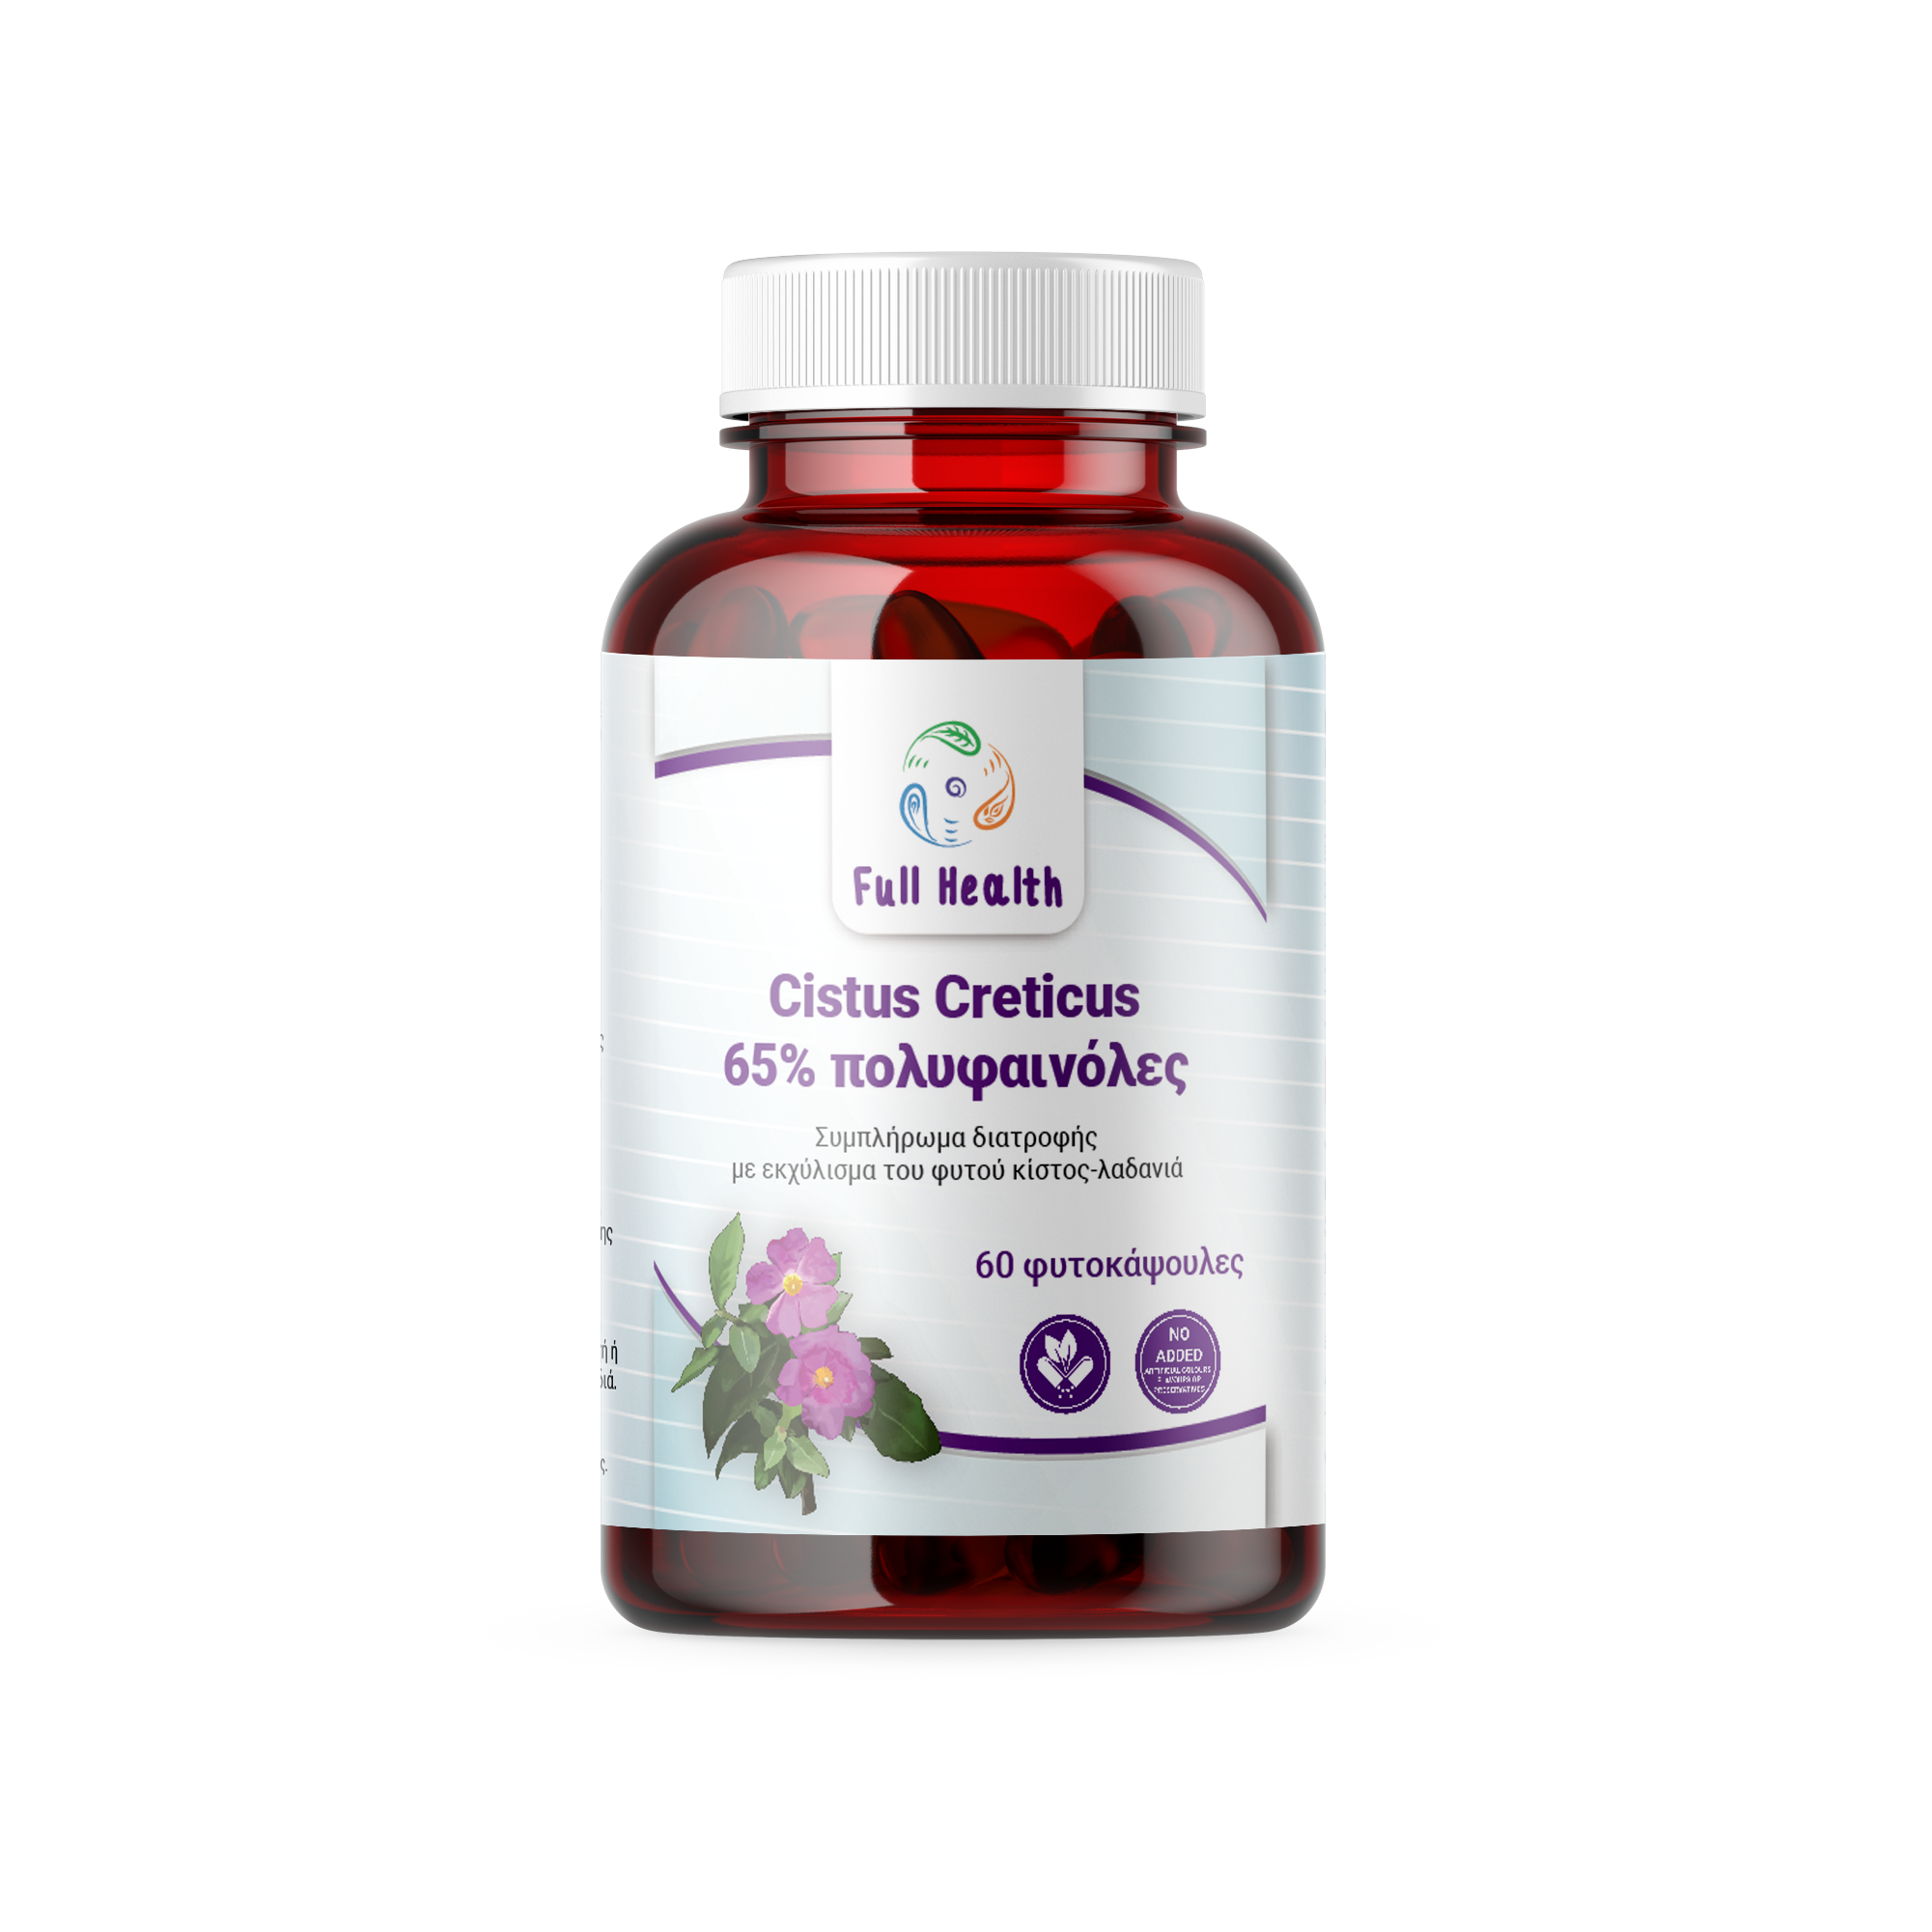 Full Health Cistus Creticus 300 mg 60 Vcaps (Συμπλήρωμα διατροφής  με εκχύλισμα του φυτού λαδανιά, σταθεροποιημένο σε 65% πολυφαινόλες)